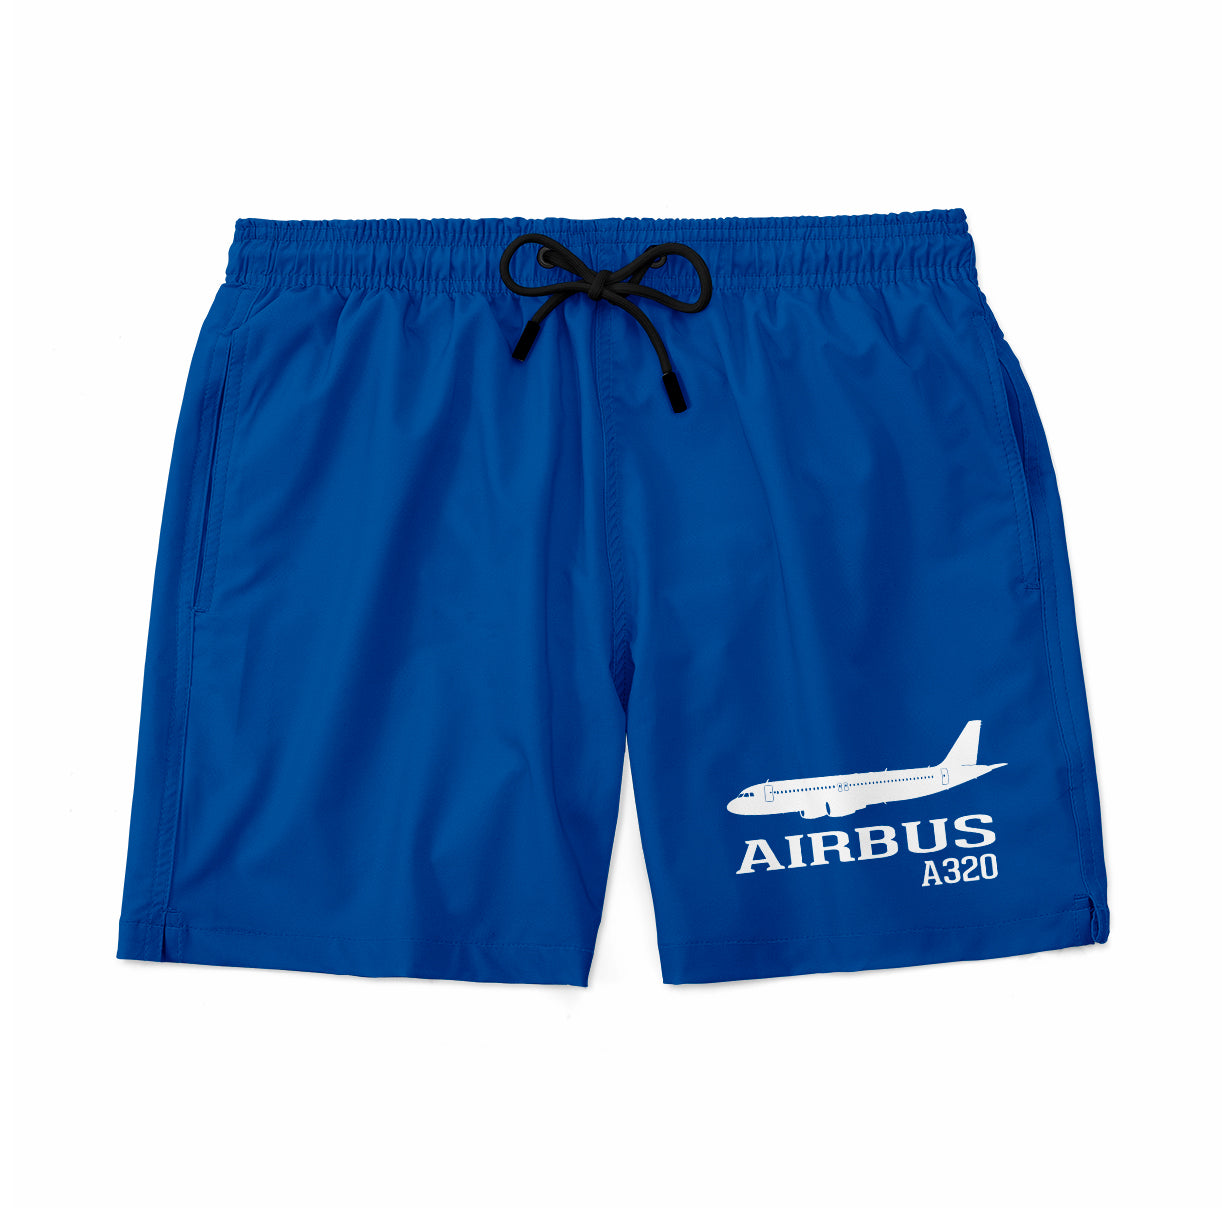 Airbus A320 Printed & Designed Swim Trunks & Shorts